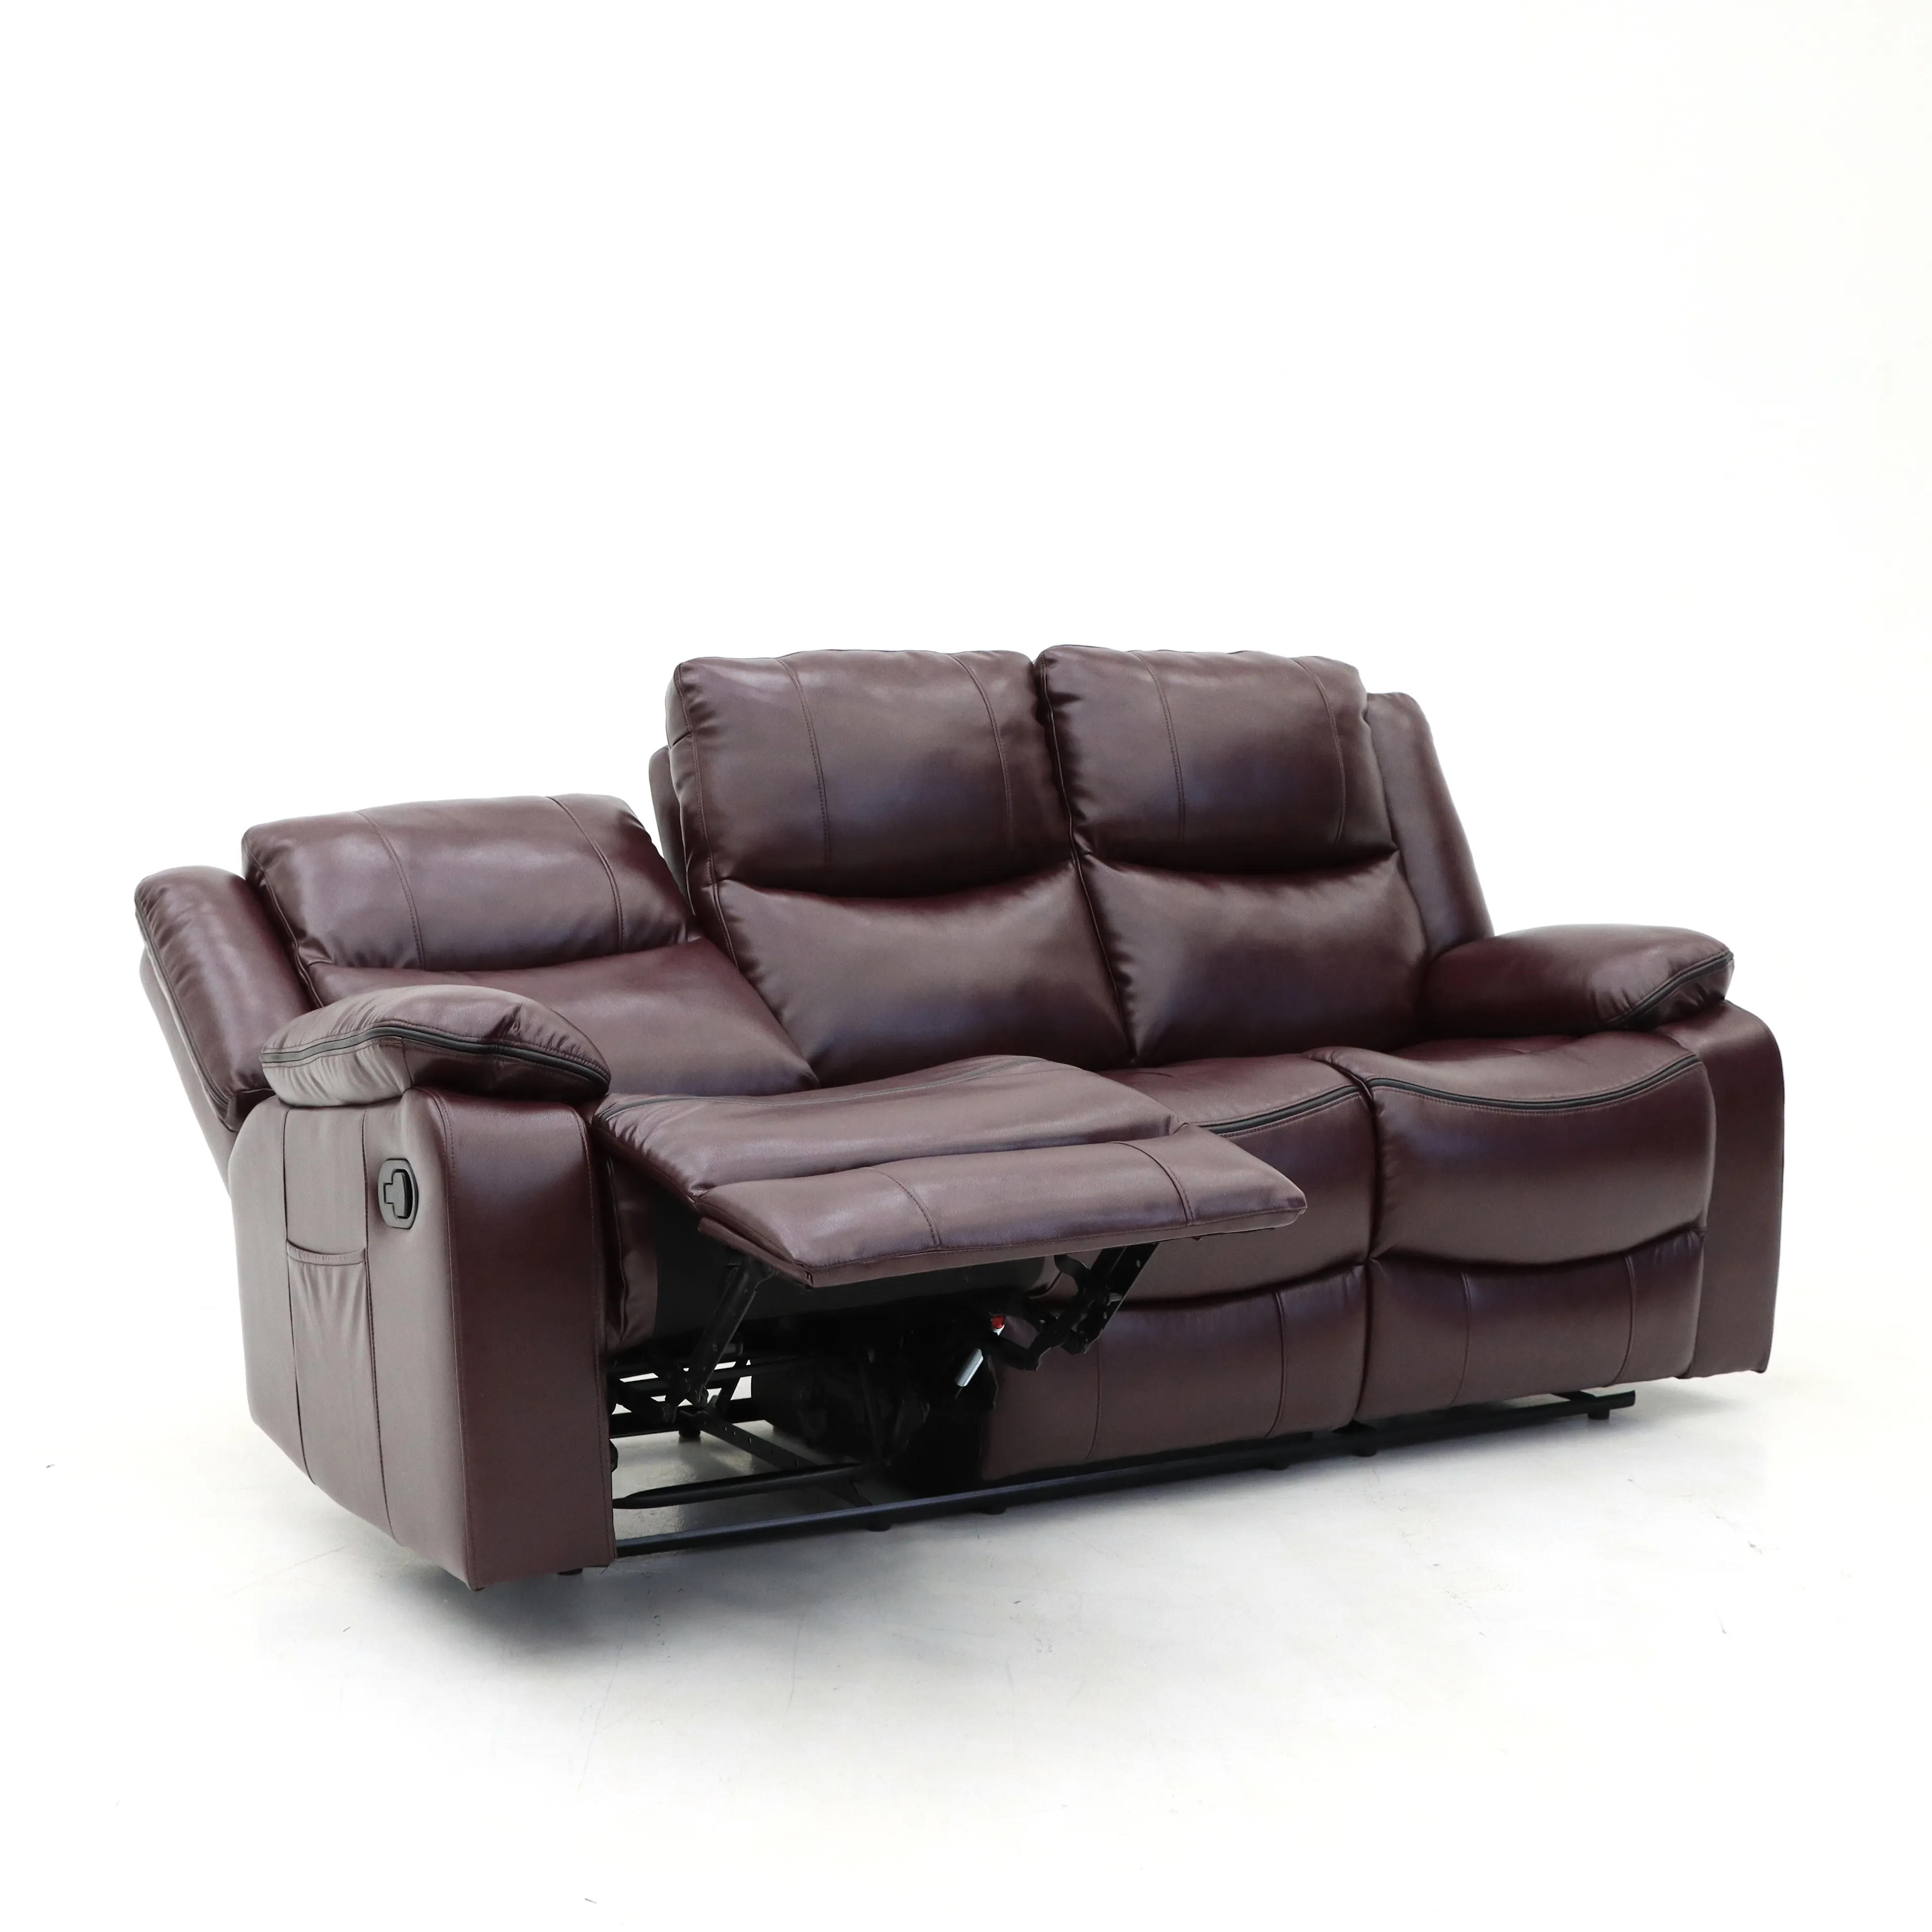 Geeksofa 가구 3 + 2 + 1 소파 setRecliner 모션 소파 세트 라운지 의자 콘솔 및 블루투스 스피커 거실